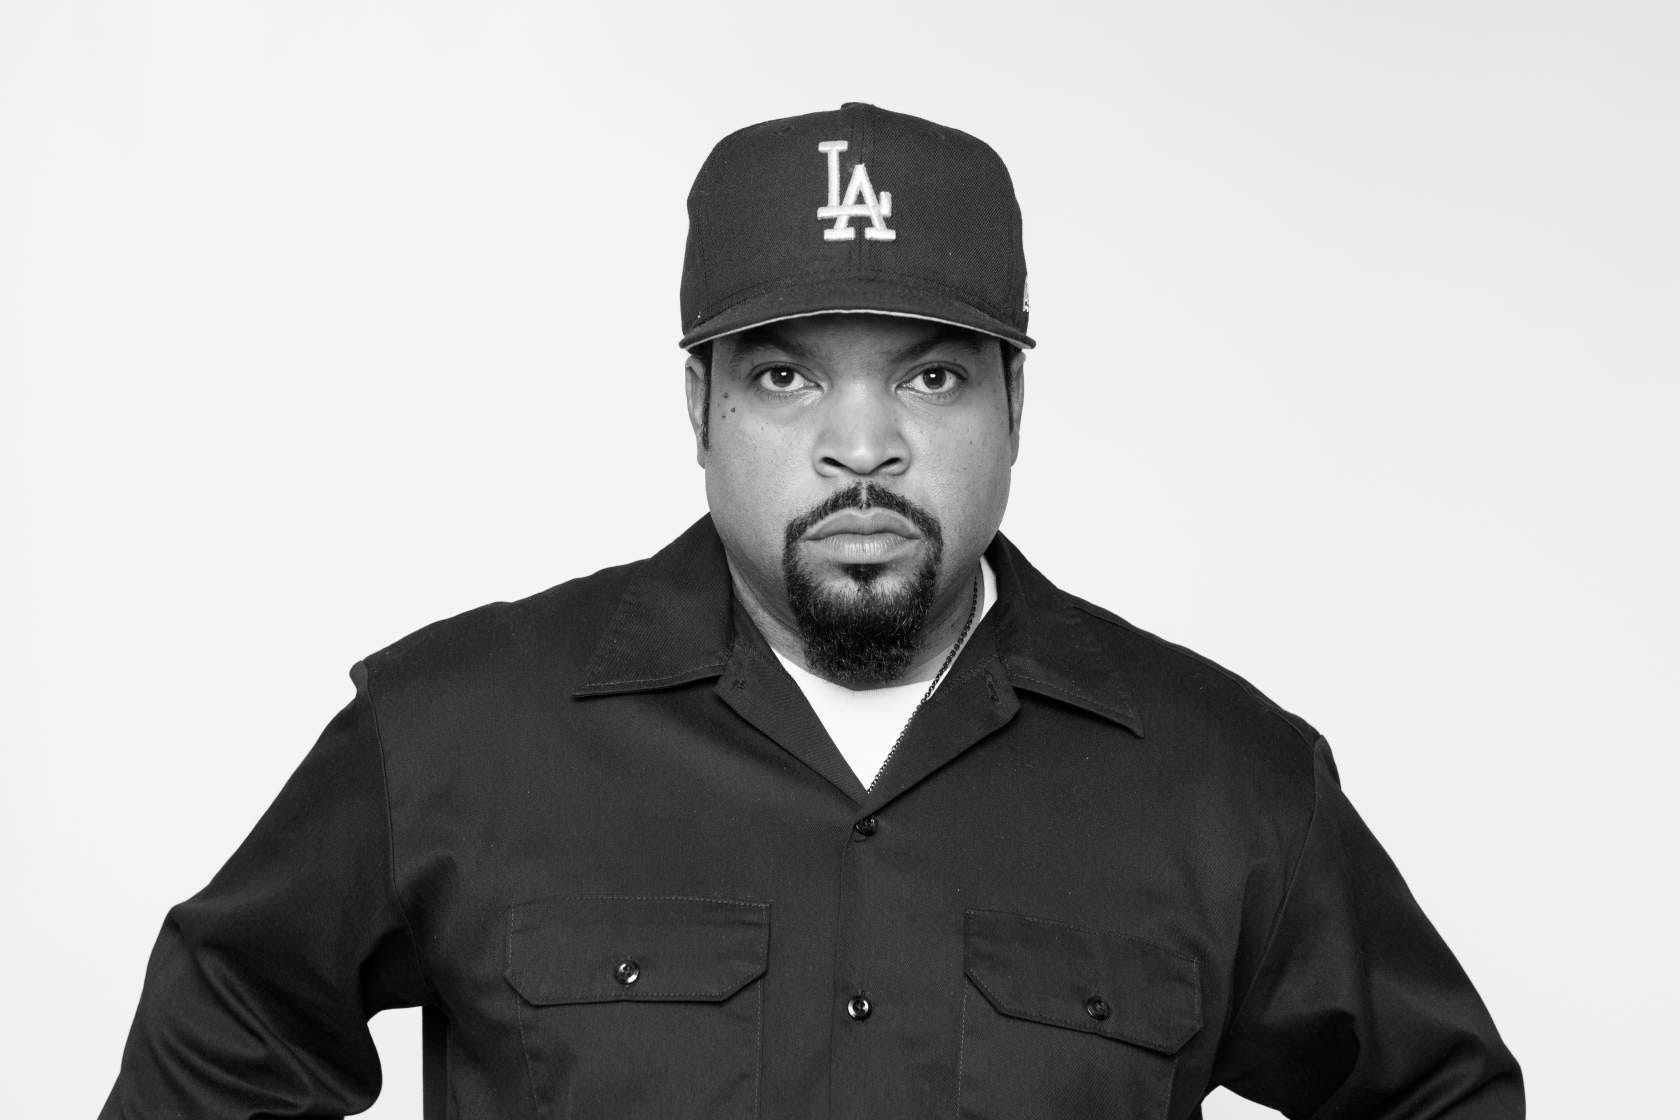 Ice Cube's best album: 'Death Certificate' or 'The Predator